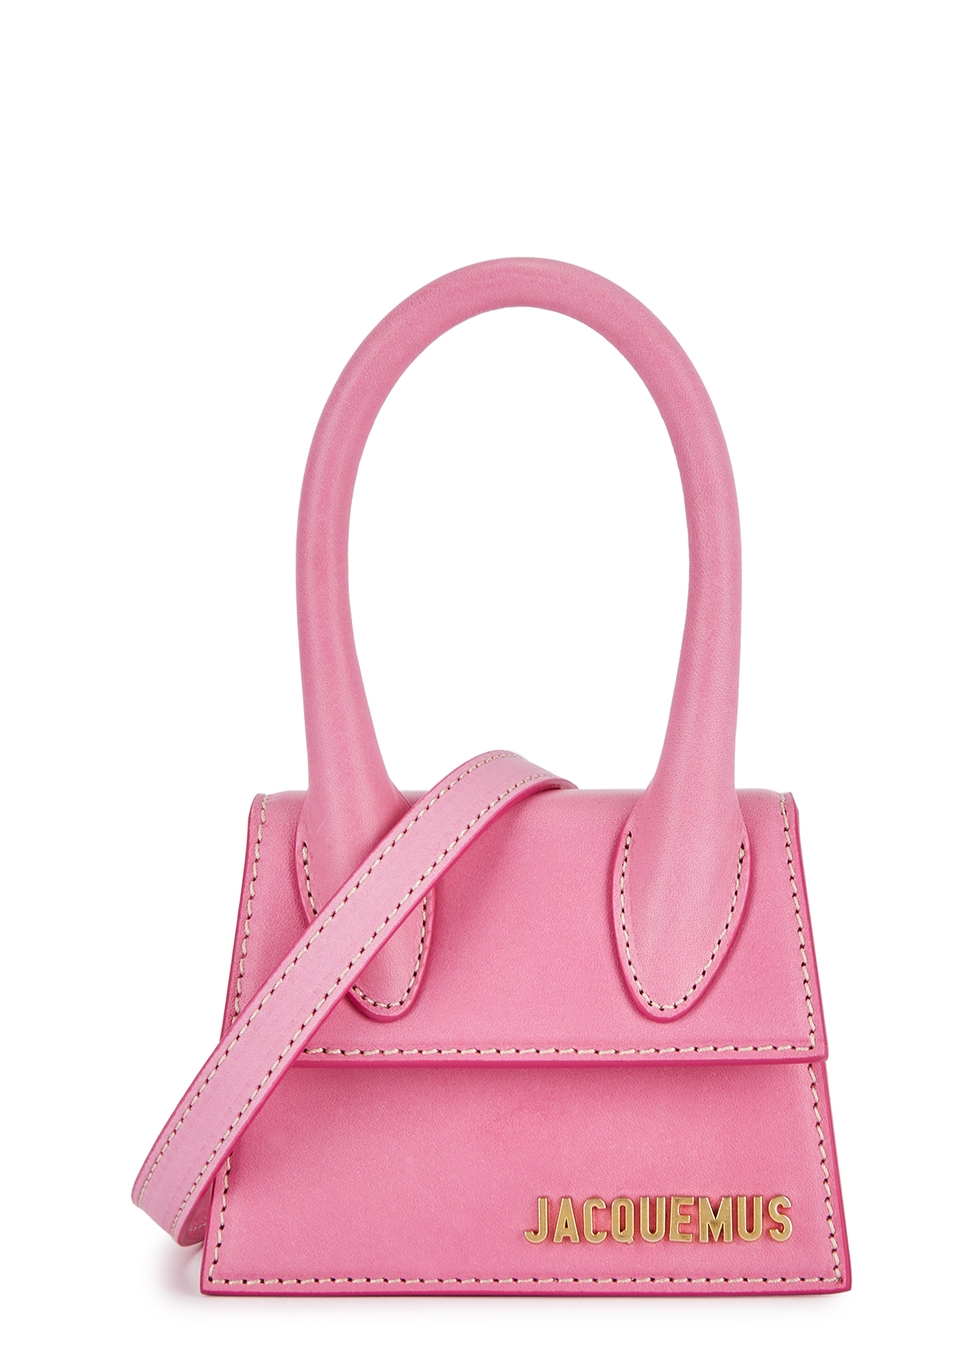 Jacquemus Le Chiquito pink leather top handle bag - Harvey Nichols